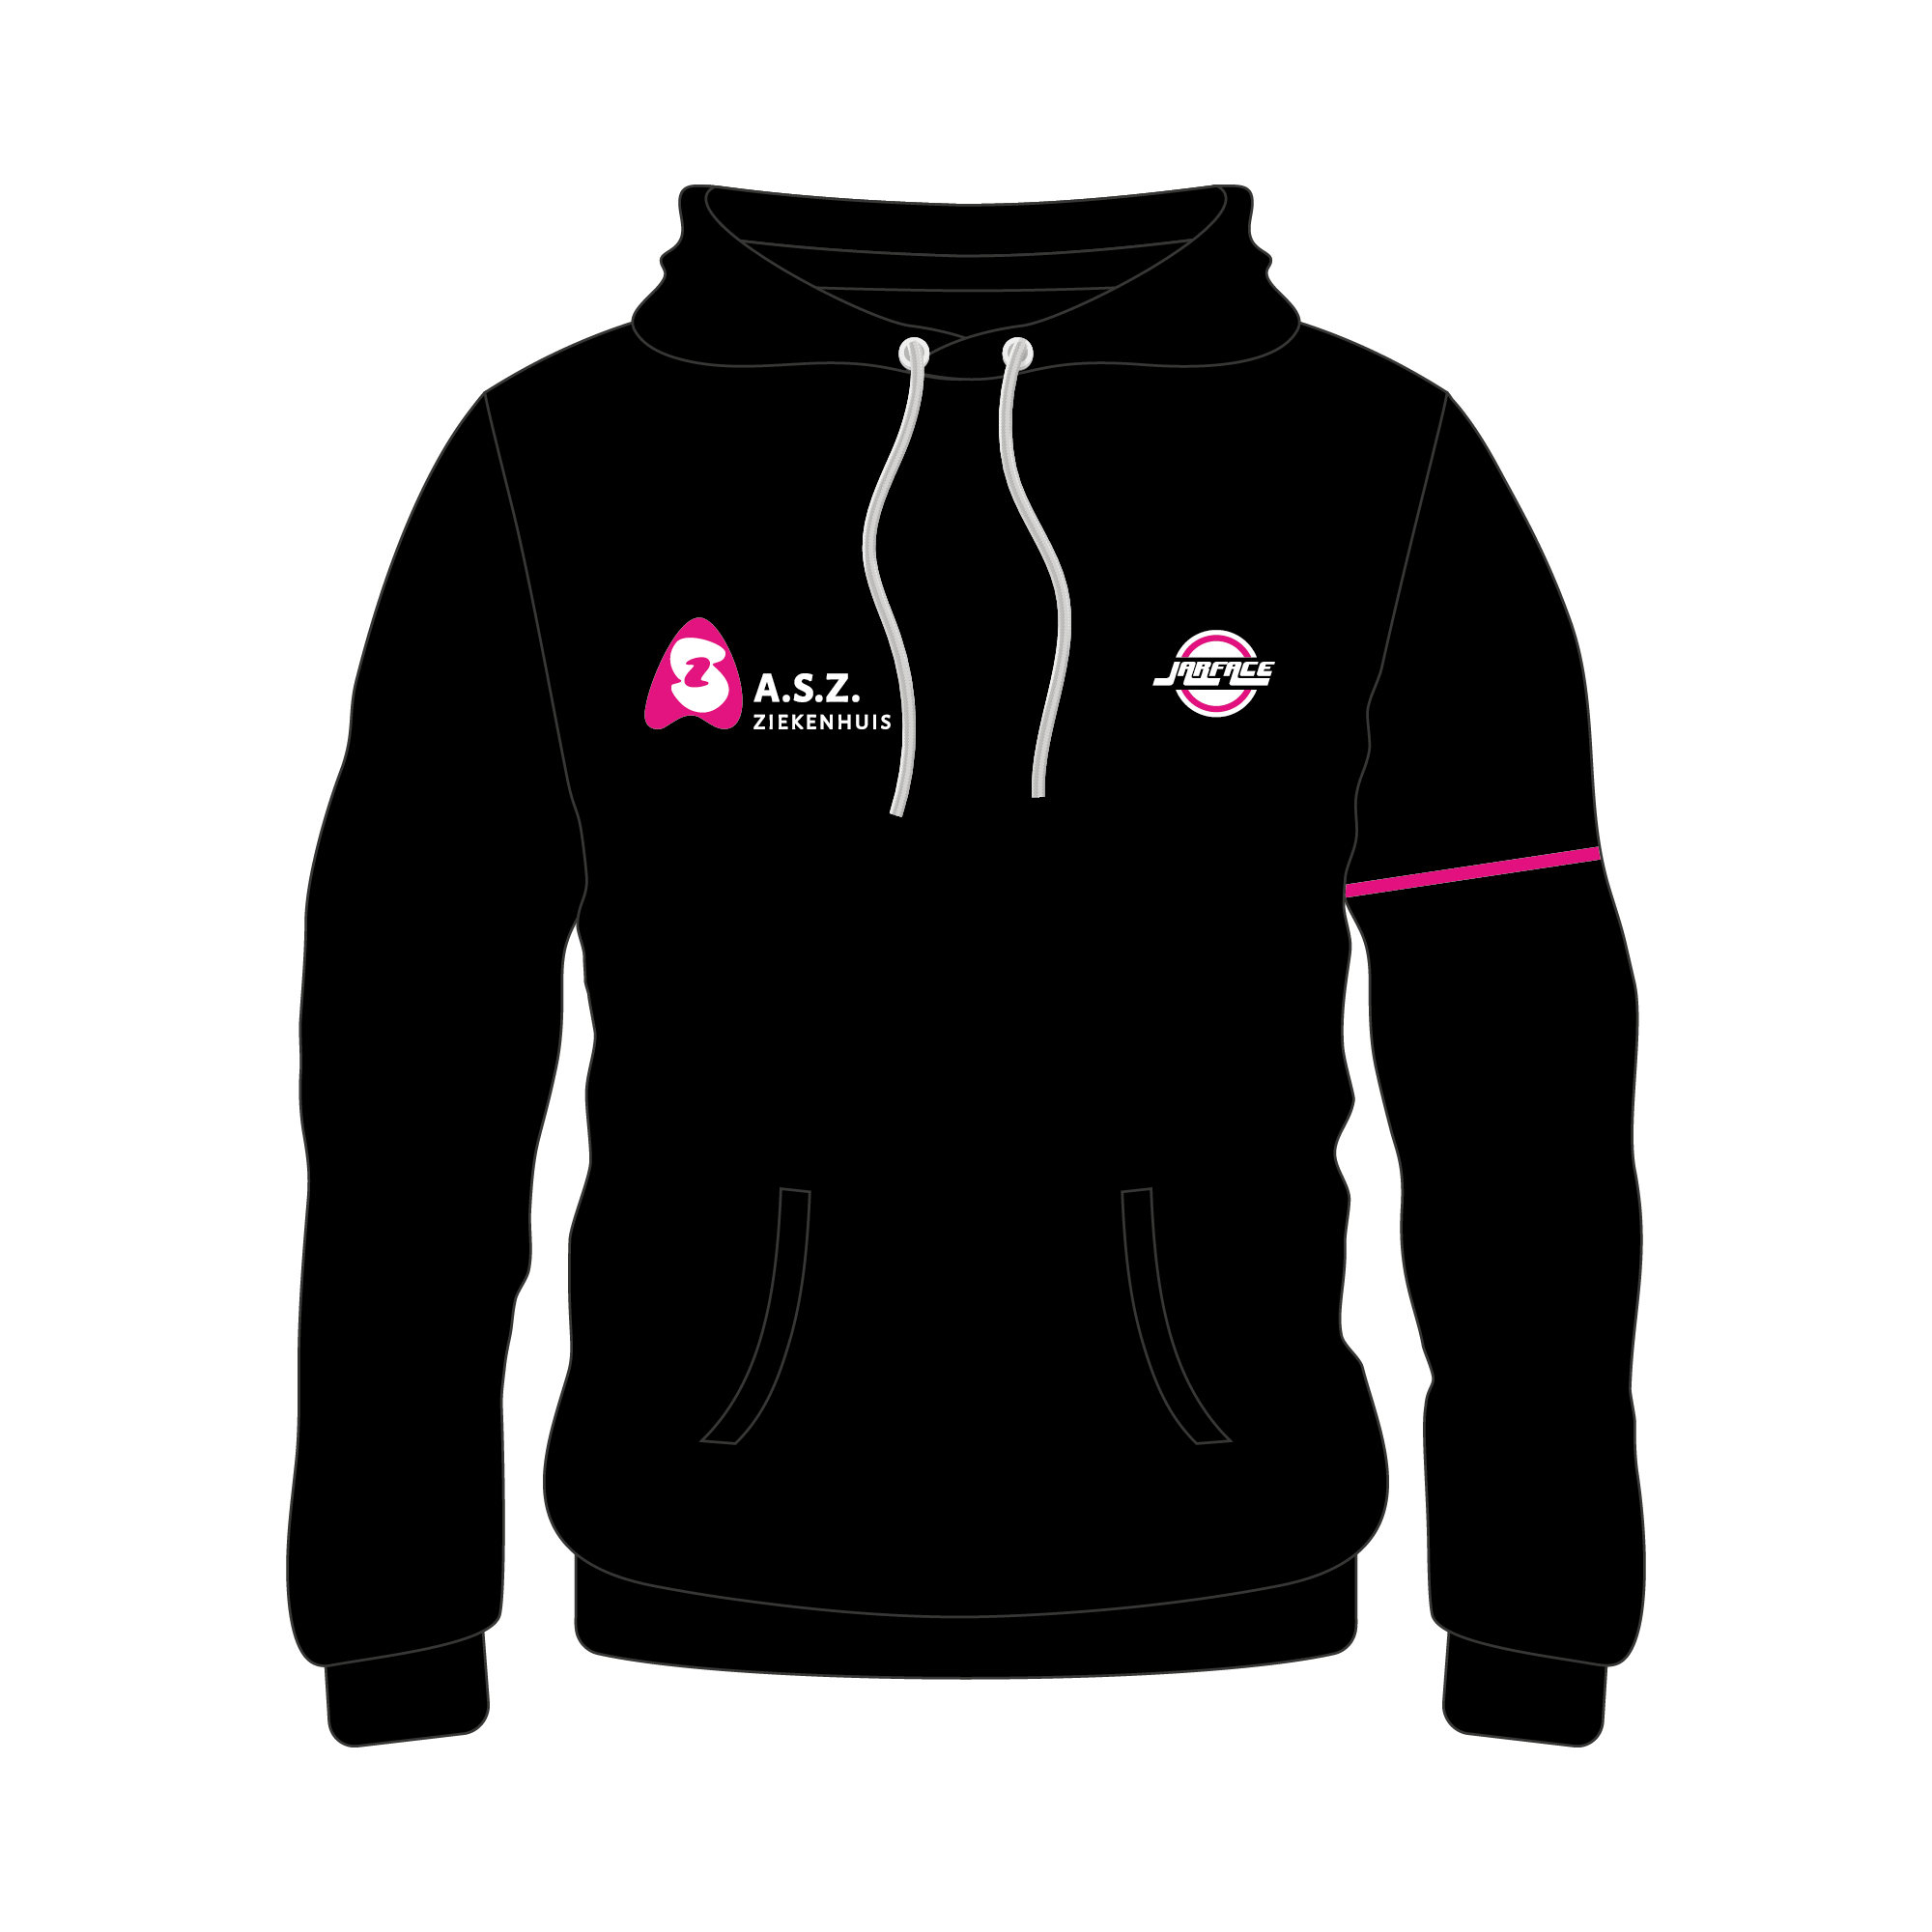 1057-hoodie-asz-teamwear-store